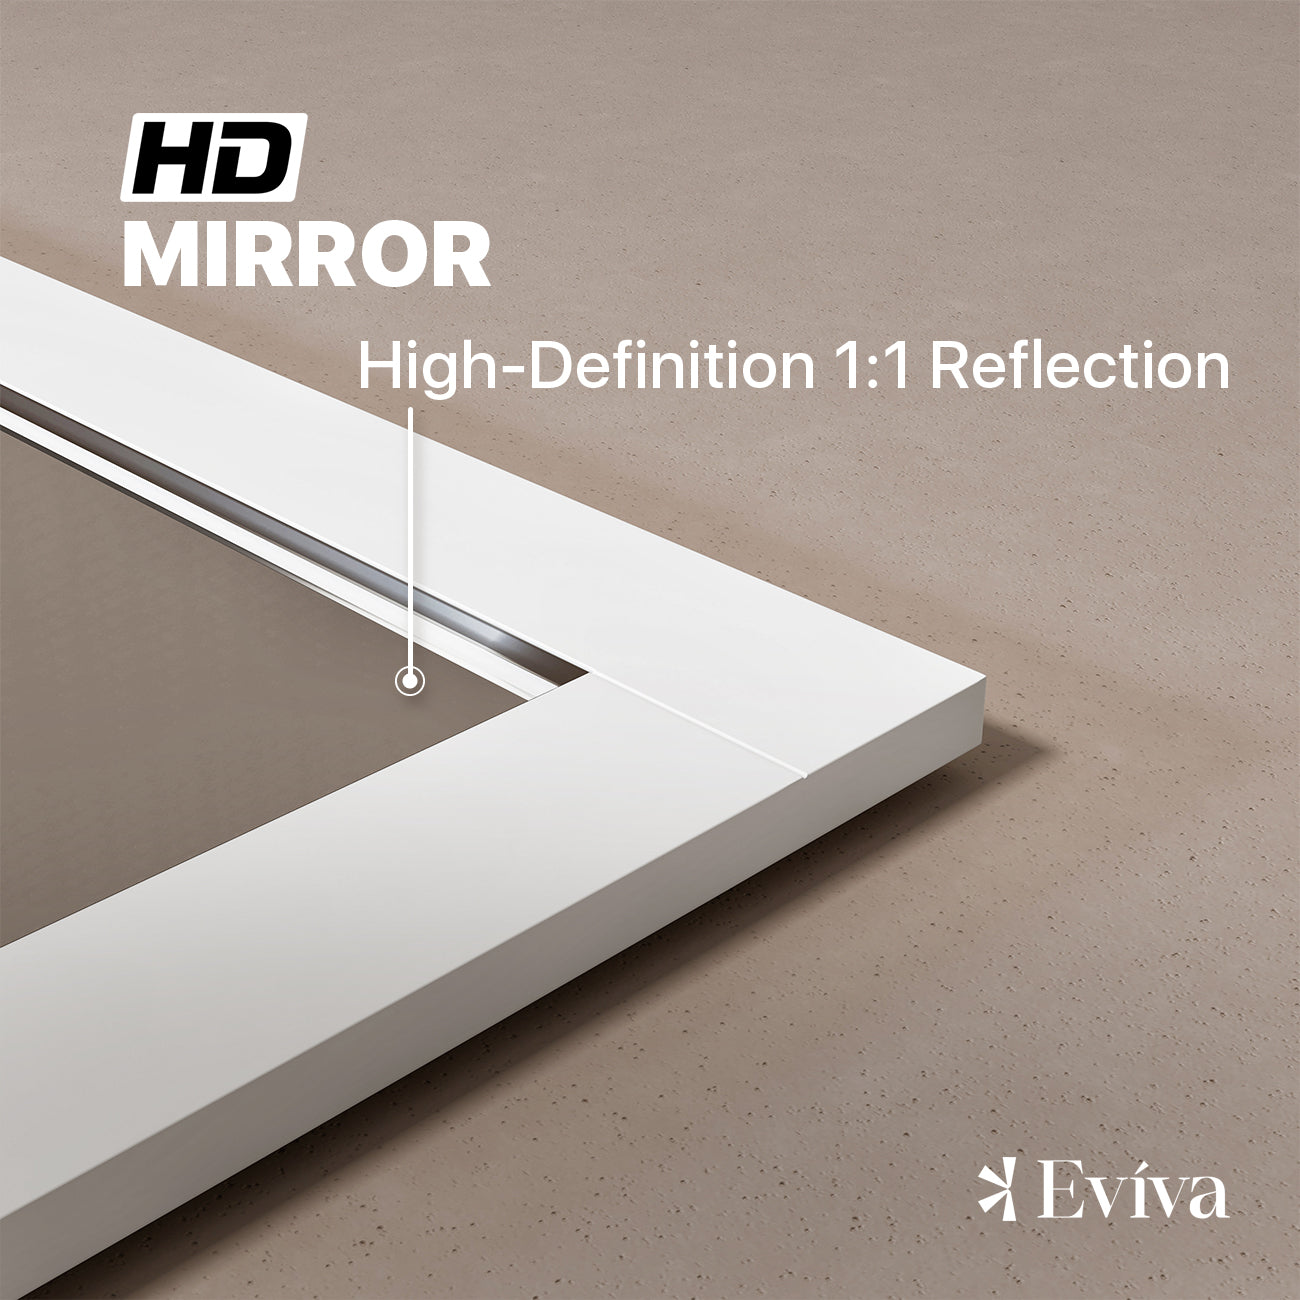 Eviva Aberdeen 24 inch White Framed Bathroom Wall Mirror